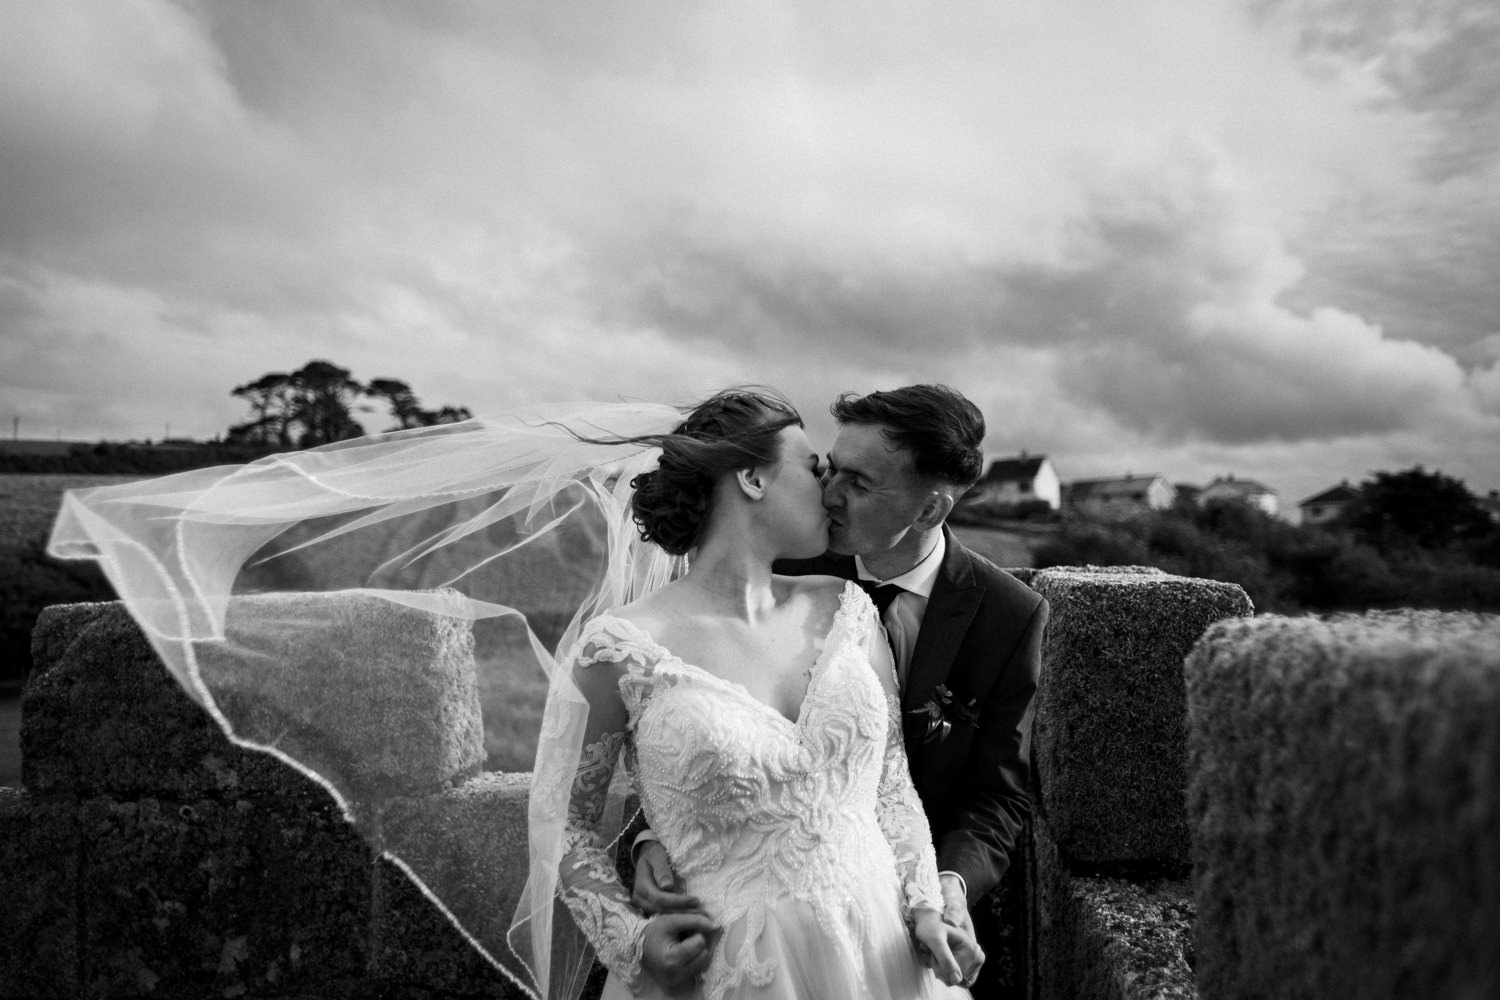 Pengersick Castle Wedding Photographer, wedding photographer Cornwall, romantic castle wedding, bride and groom, castle wedding, autumn wedding